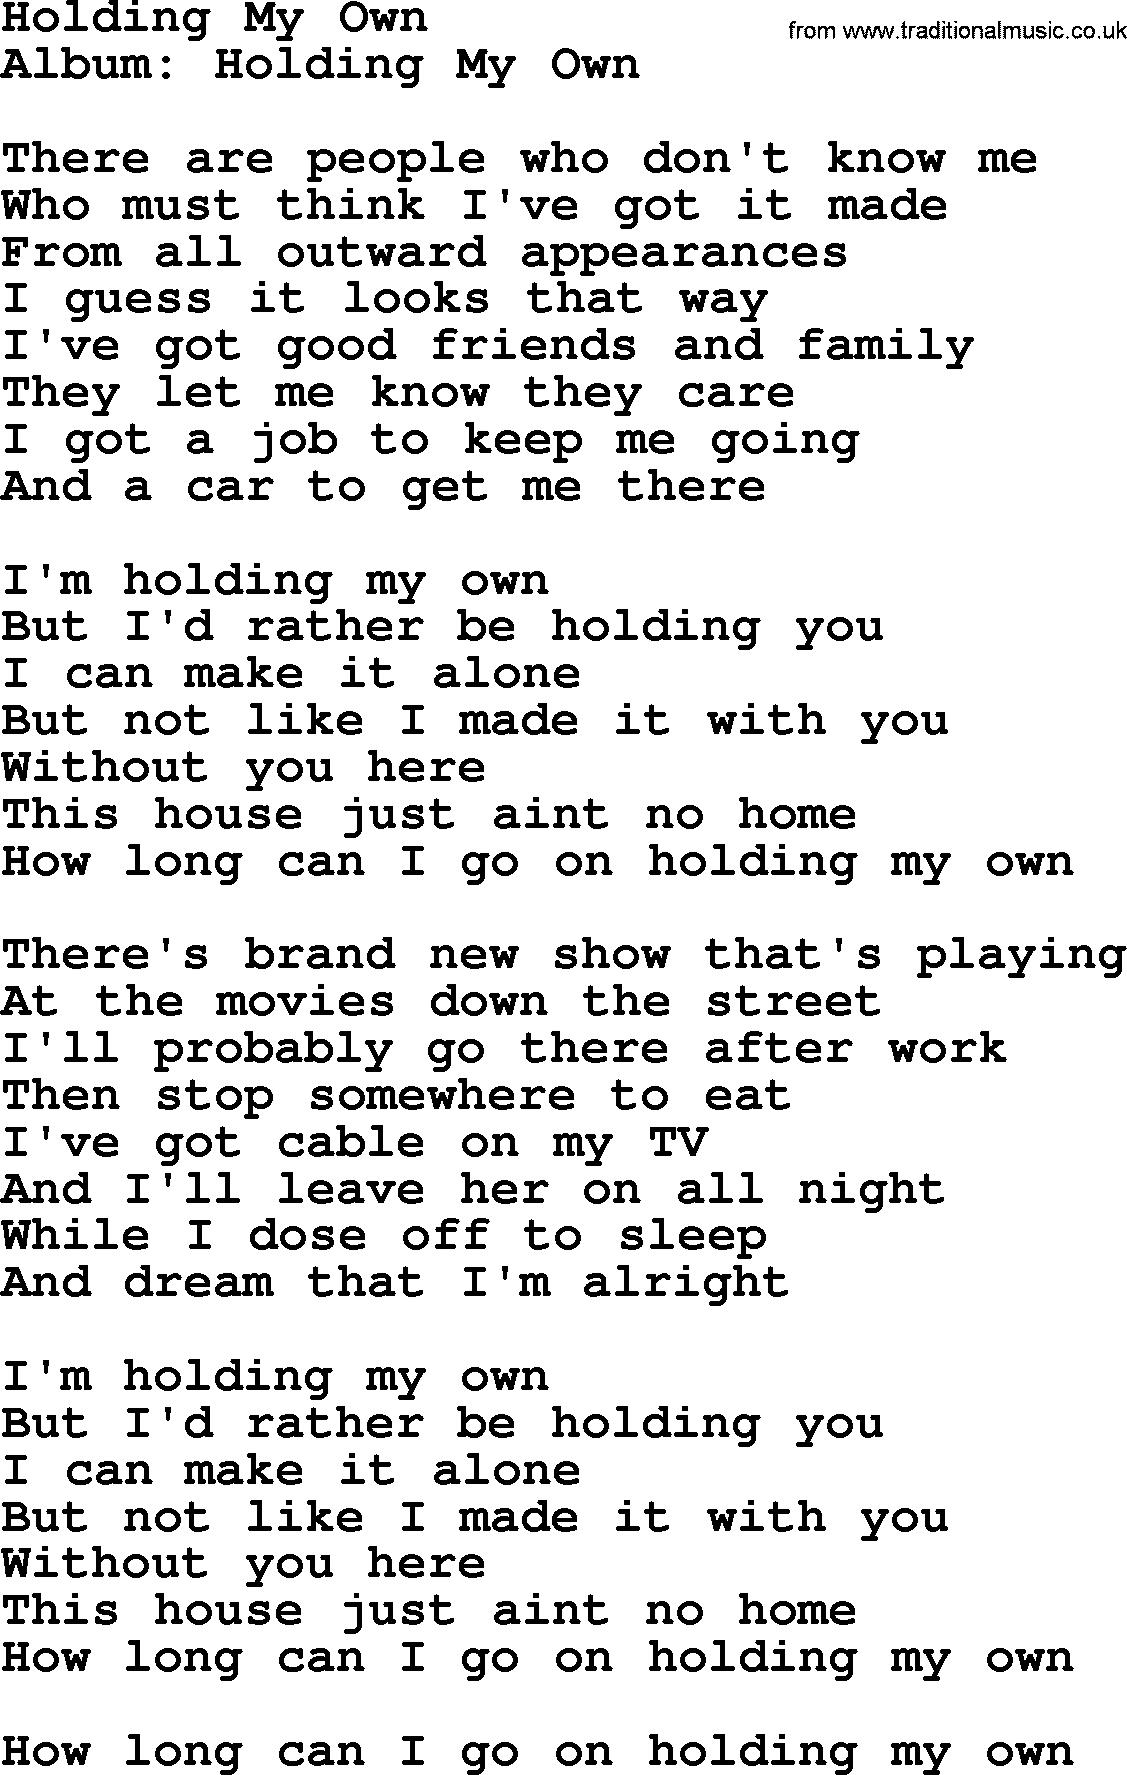 George Strait song: Holding My Own, lyrics